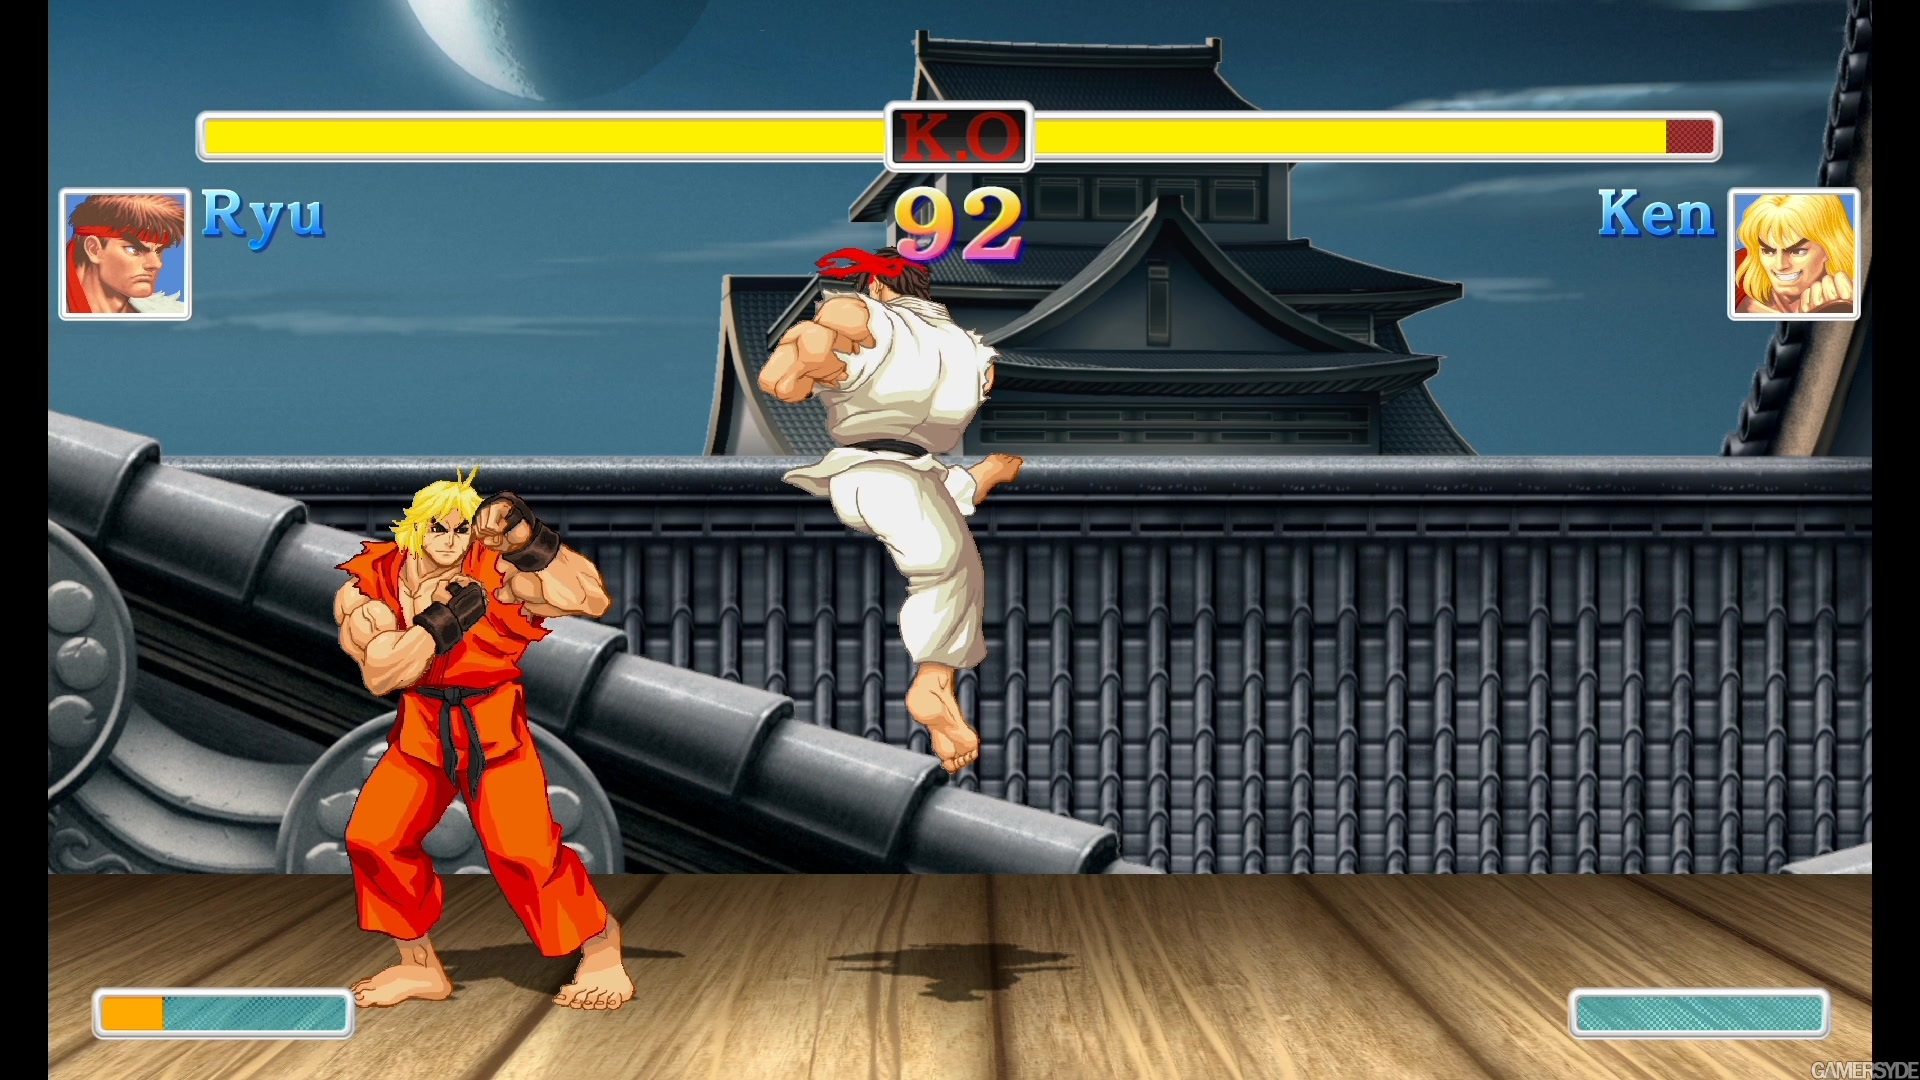 LEVEL 8 Ken VS Ryu STREET FIGHTER V Hardest Battle Match 